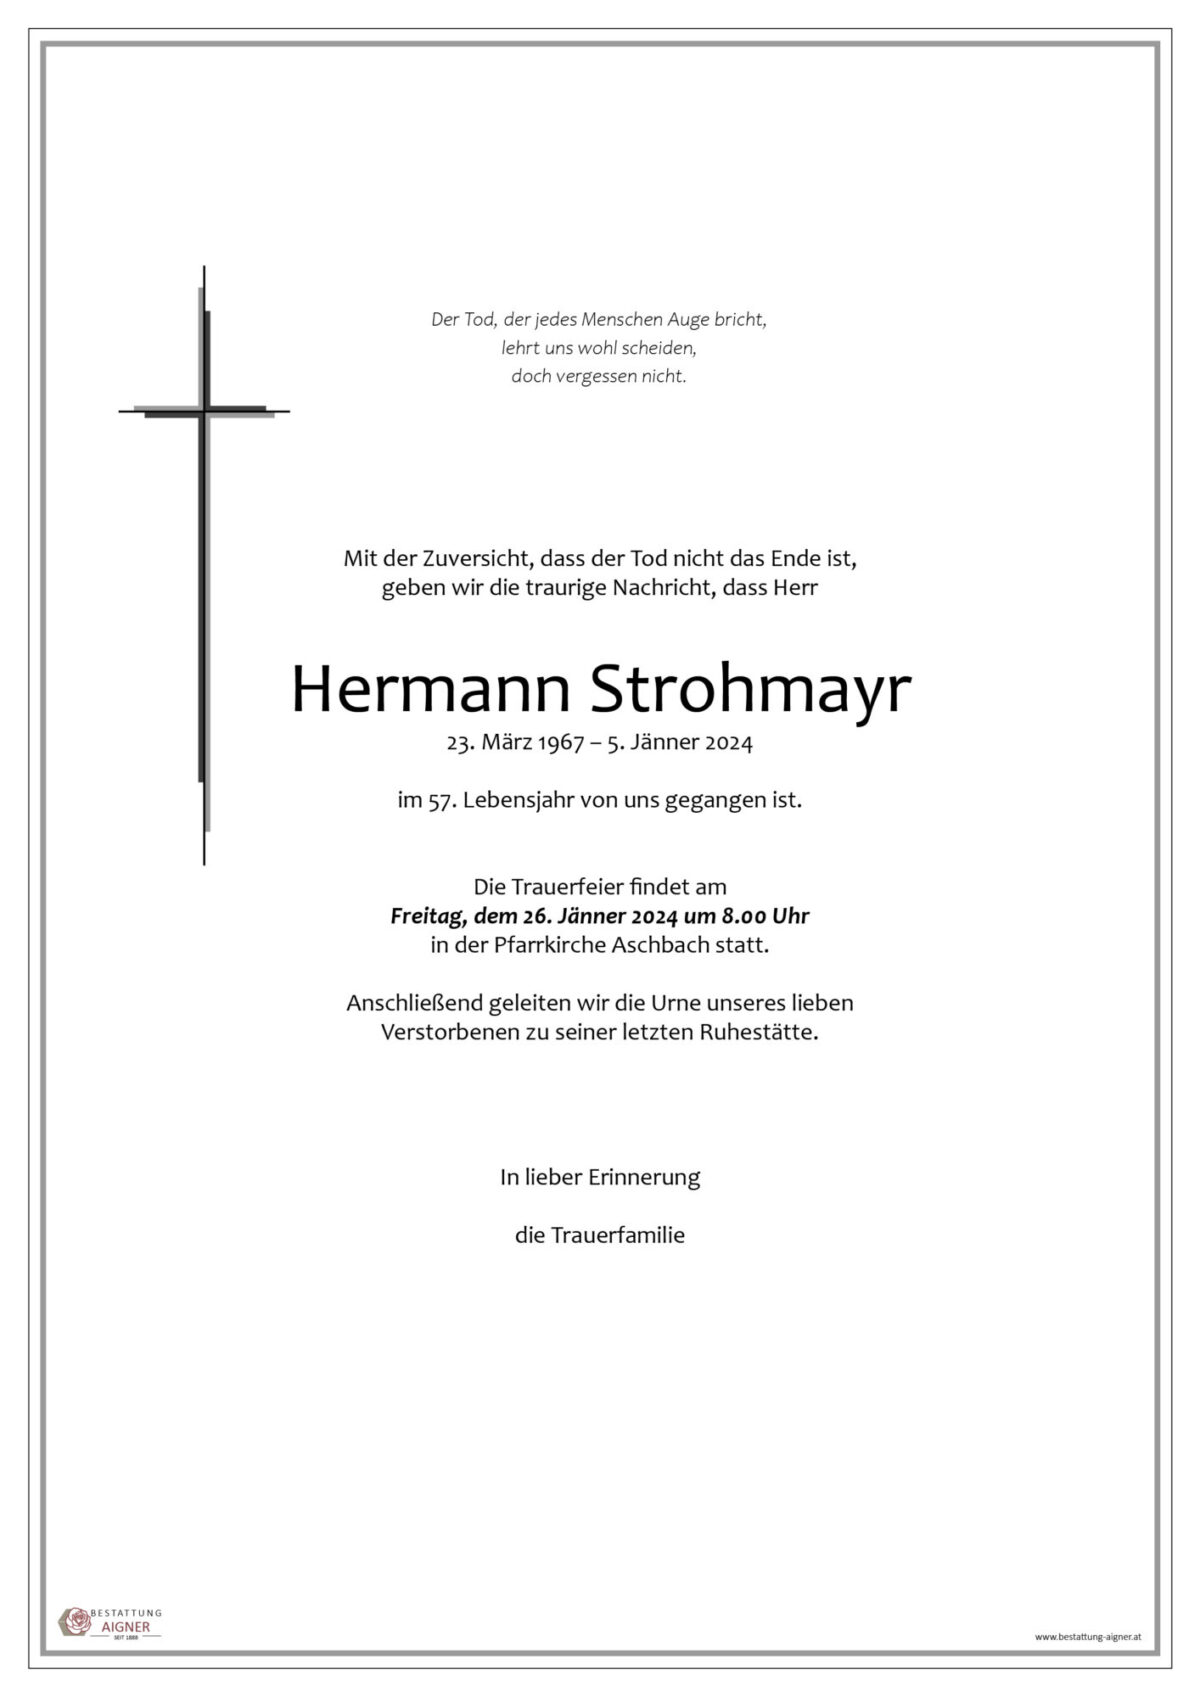 Hermann Strohmayr